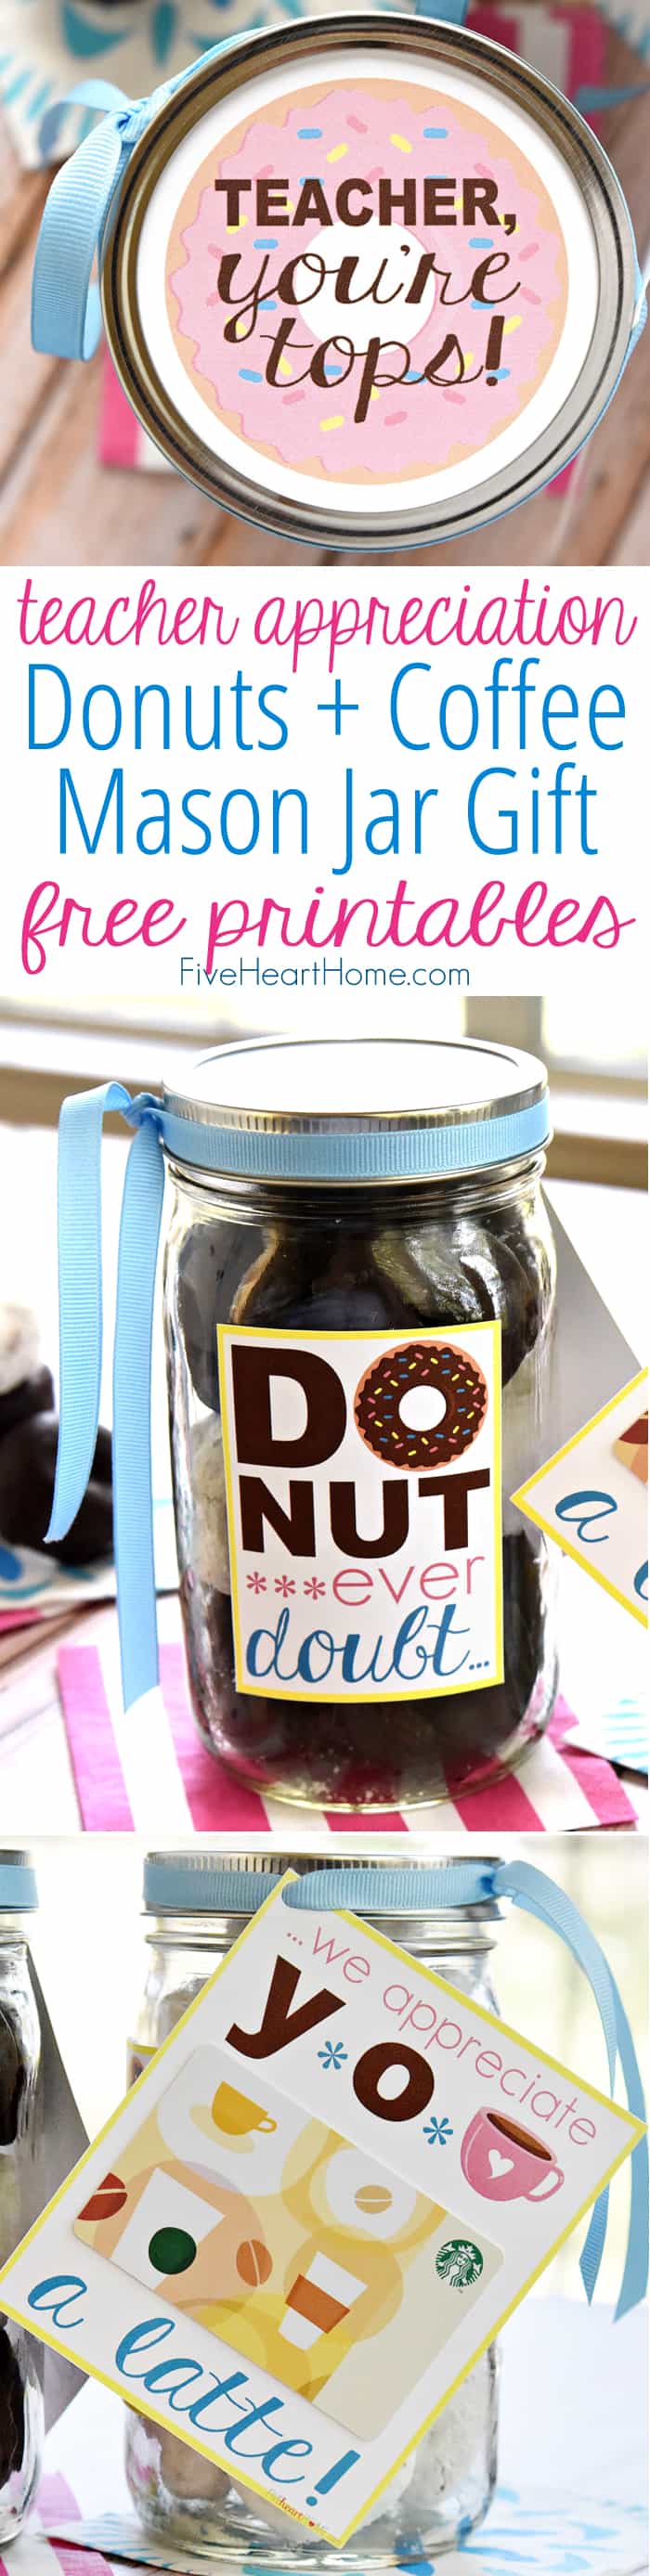 teacher-appreciation-donuts-coffee-mason-jar-gift-free-printables